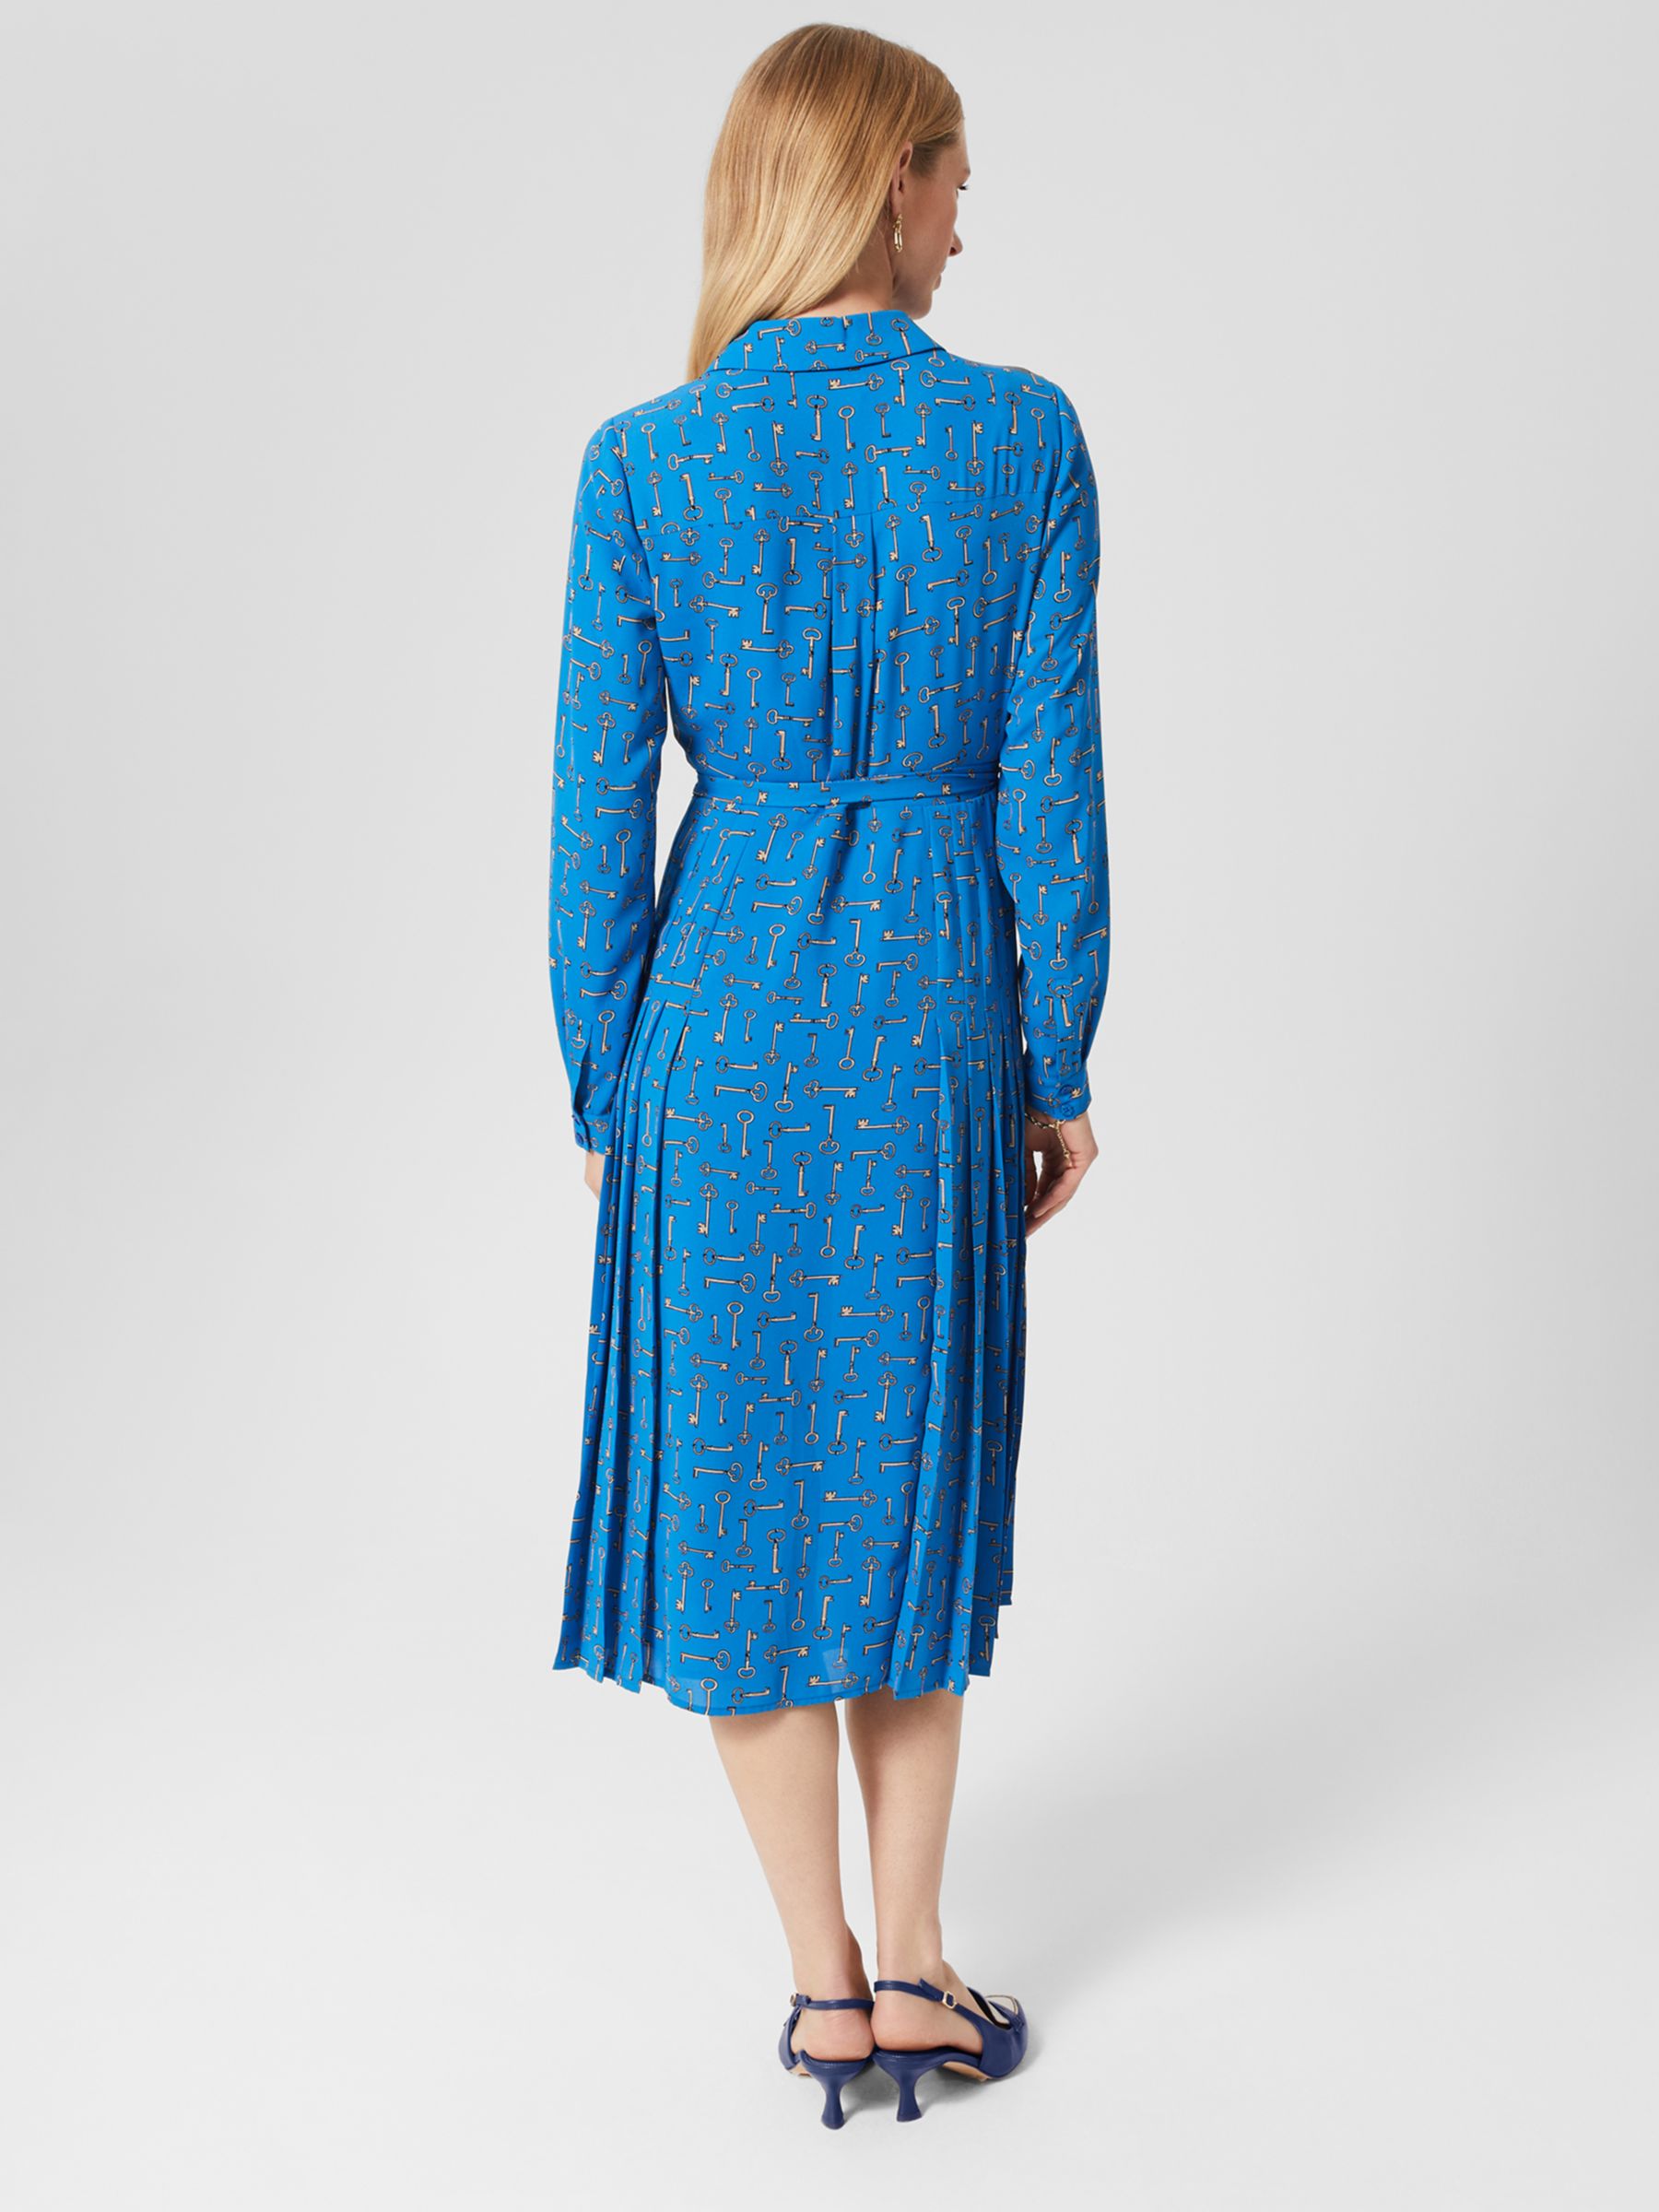 Hobbs Alberta Key Print Shirt Dress, Imperial Blue at John Lewis & Partners